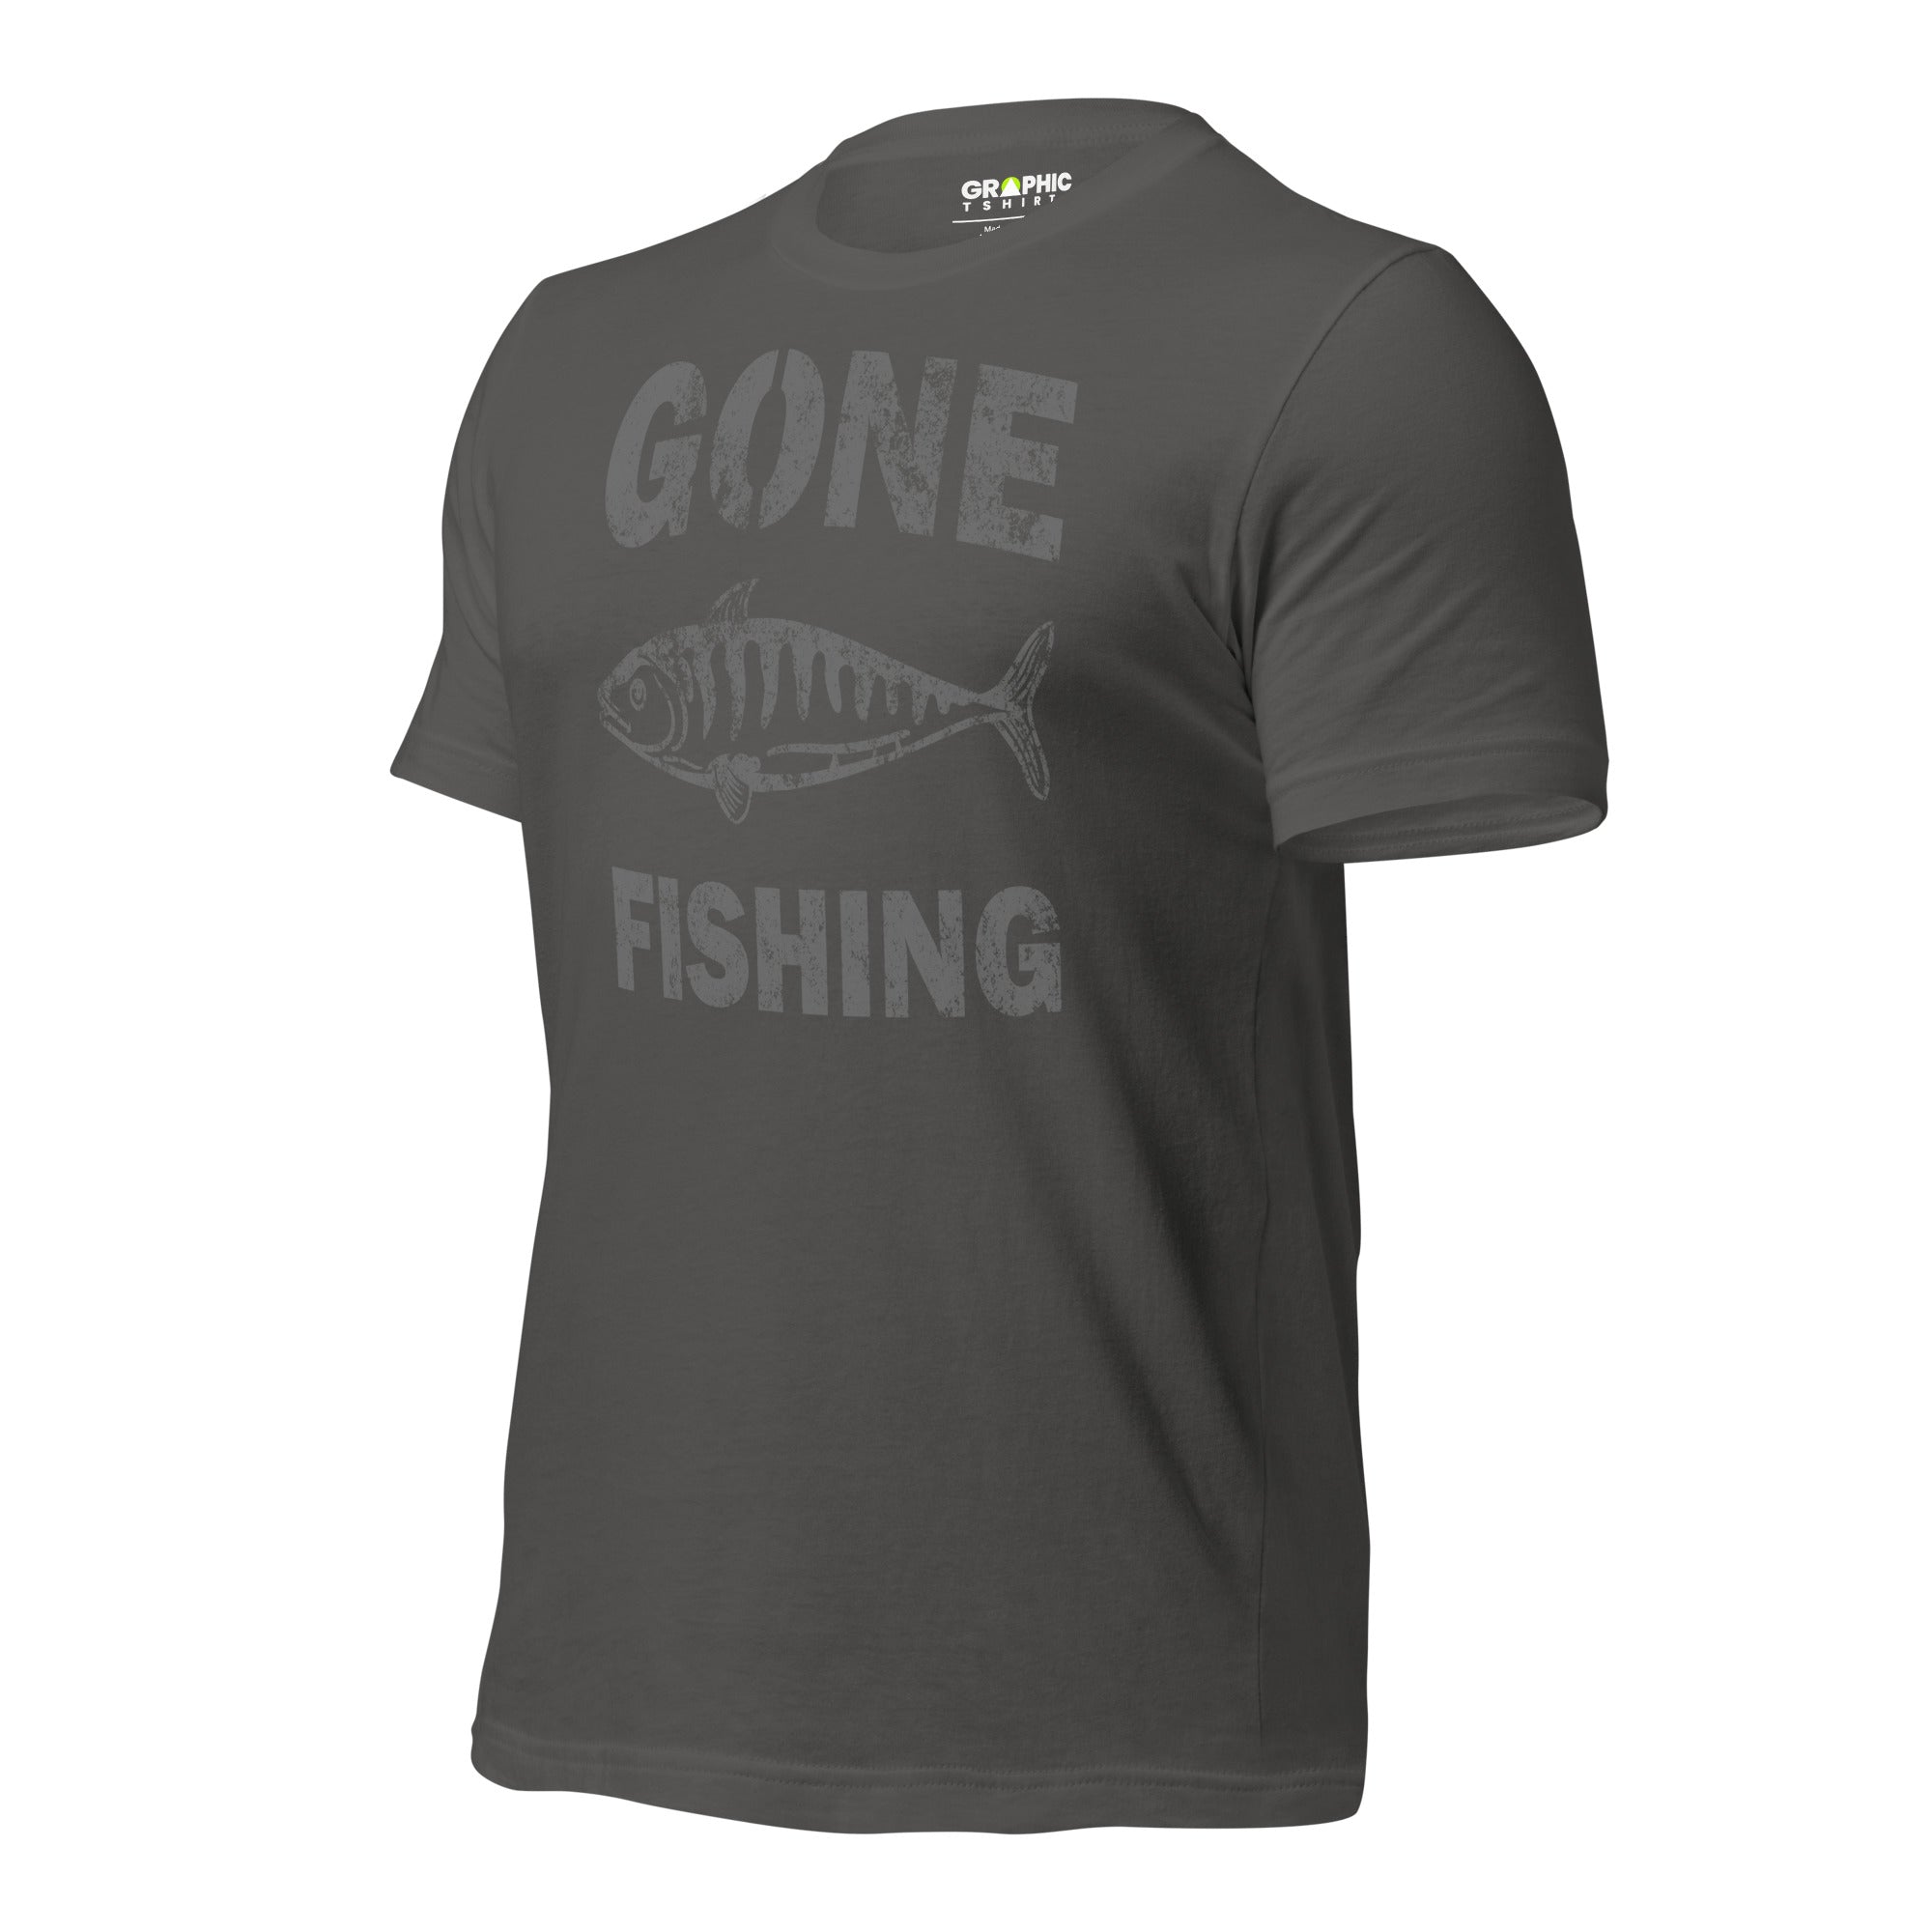 Unisex Staple T-Shirt - Gone Fishing - GRAPHIC T-SHIRTS